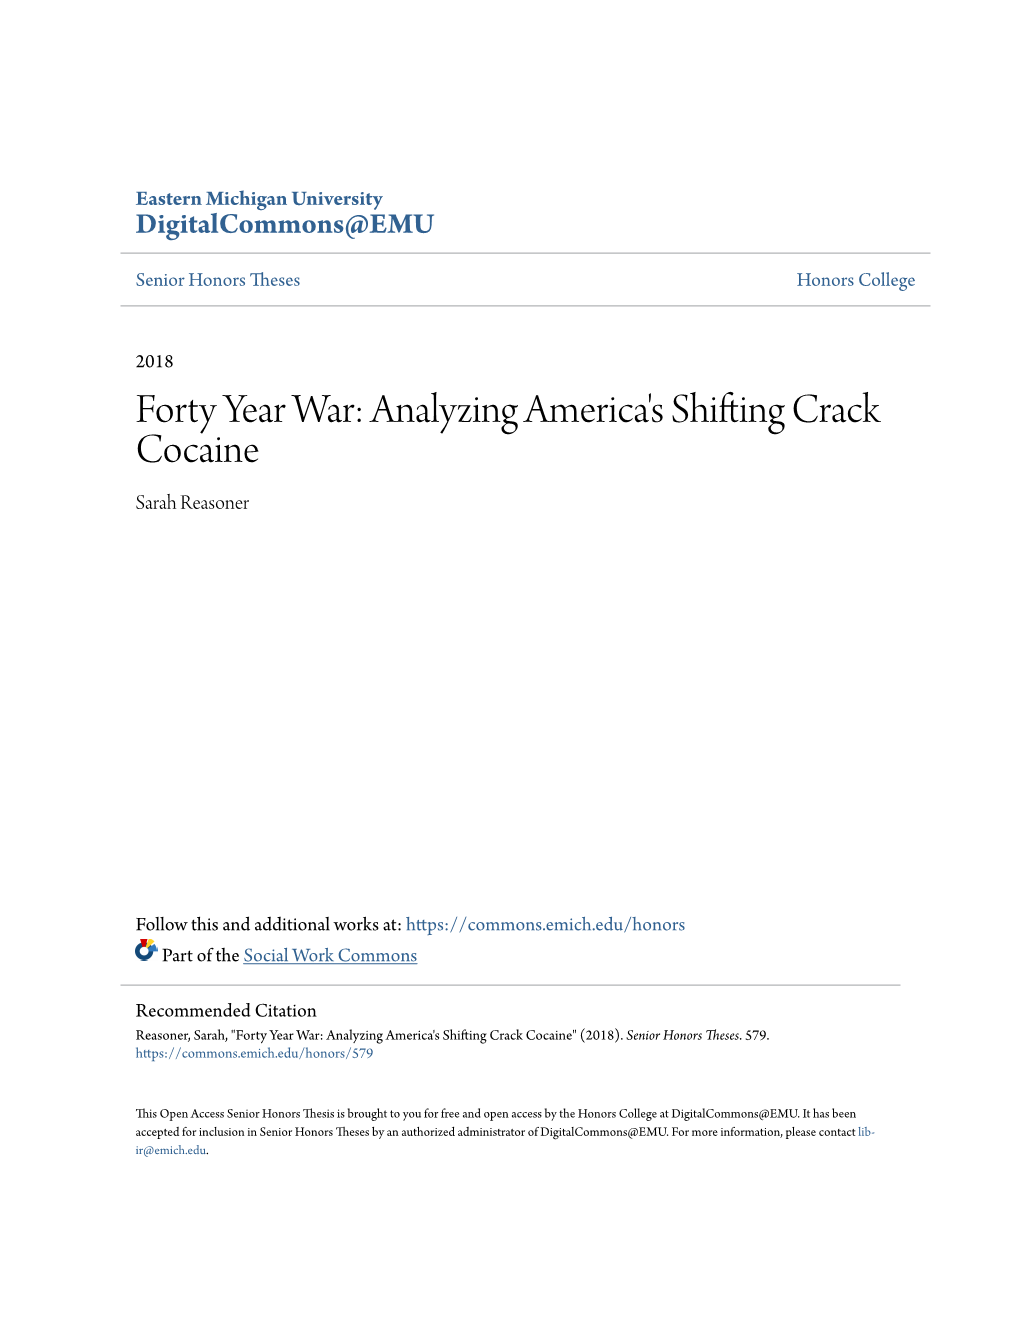 Analyzing America's Shifting Crack Cocaine Sarah Reasoner